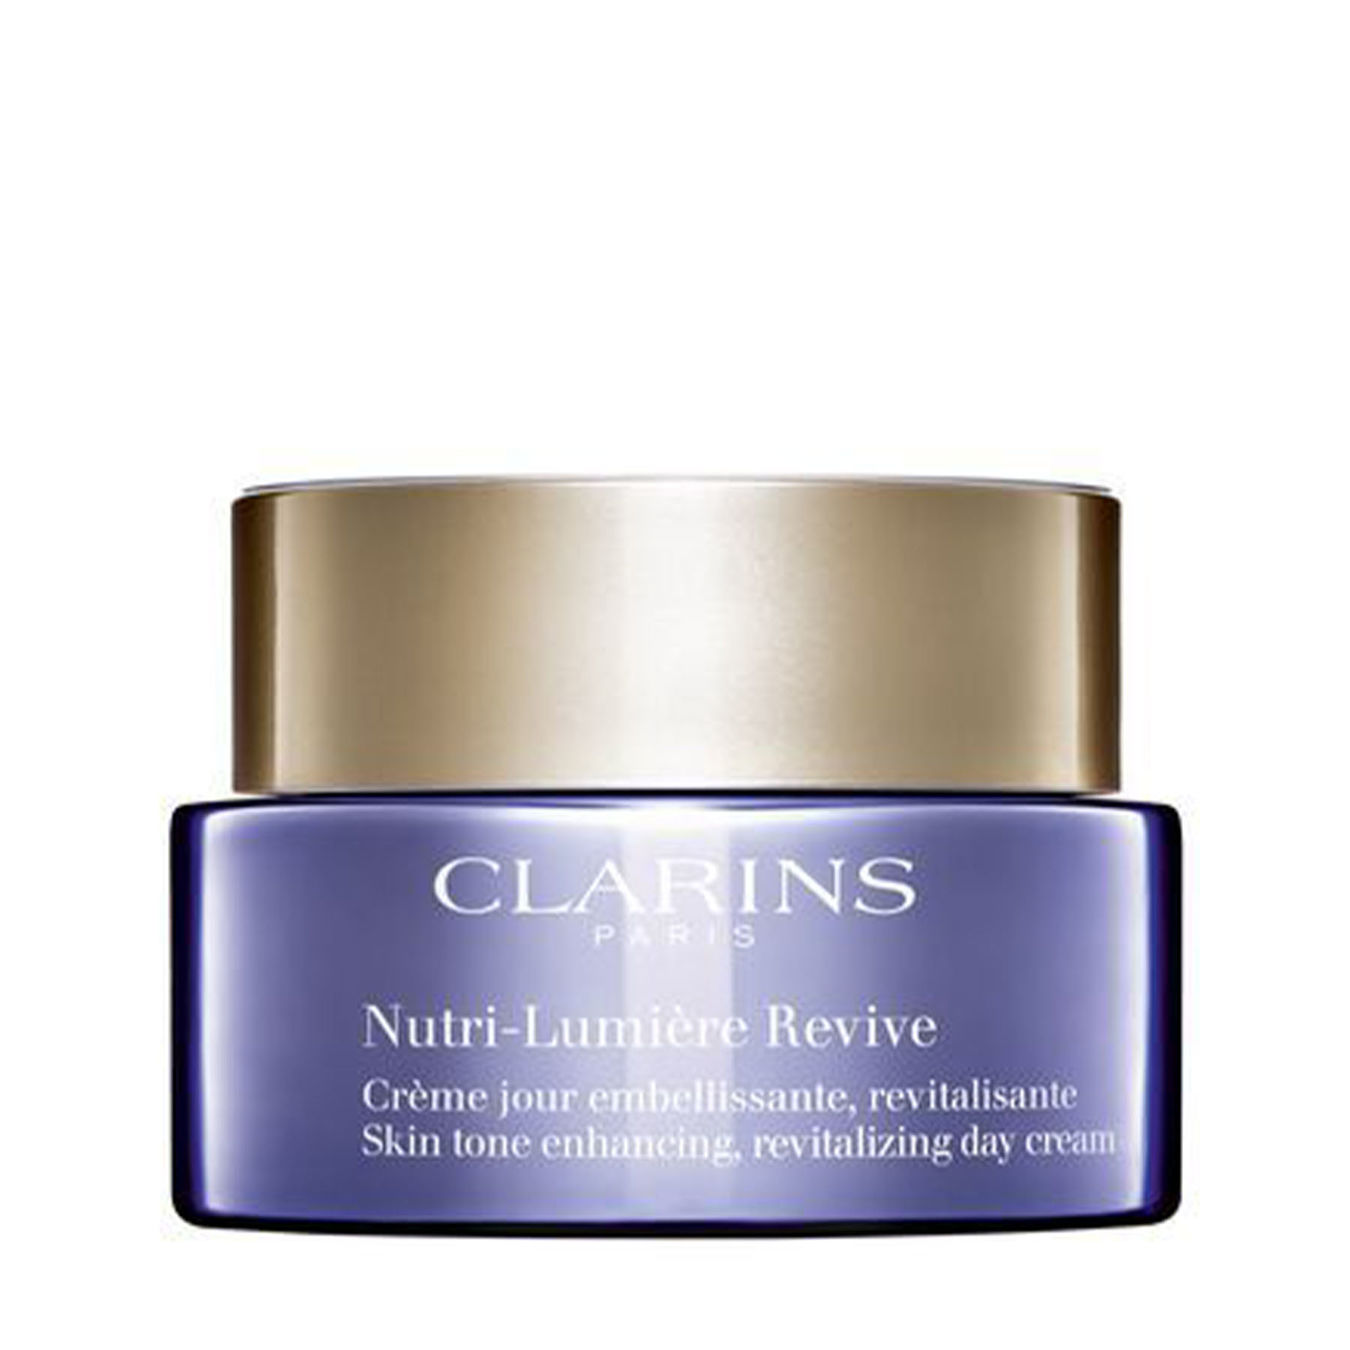 Clarins Nutri-Lumière Revive revitalizing Day Cream 50ml Damen von Clarins